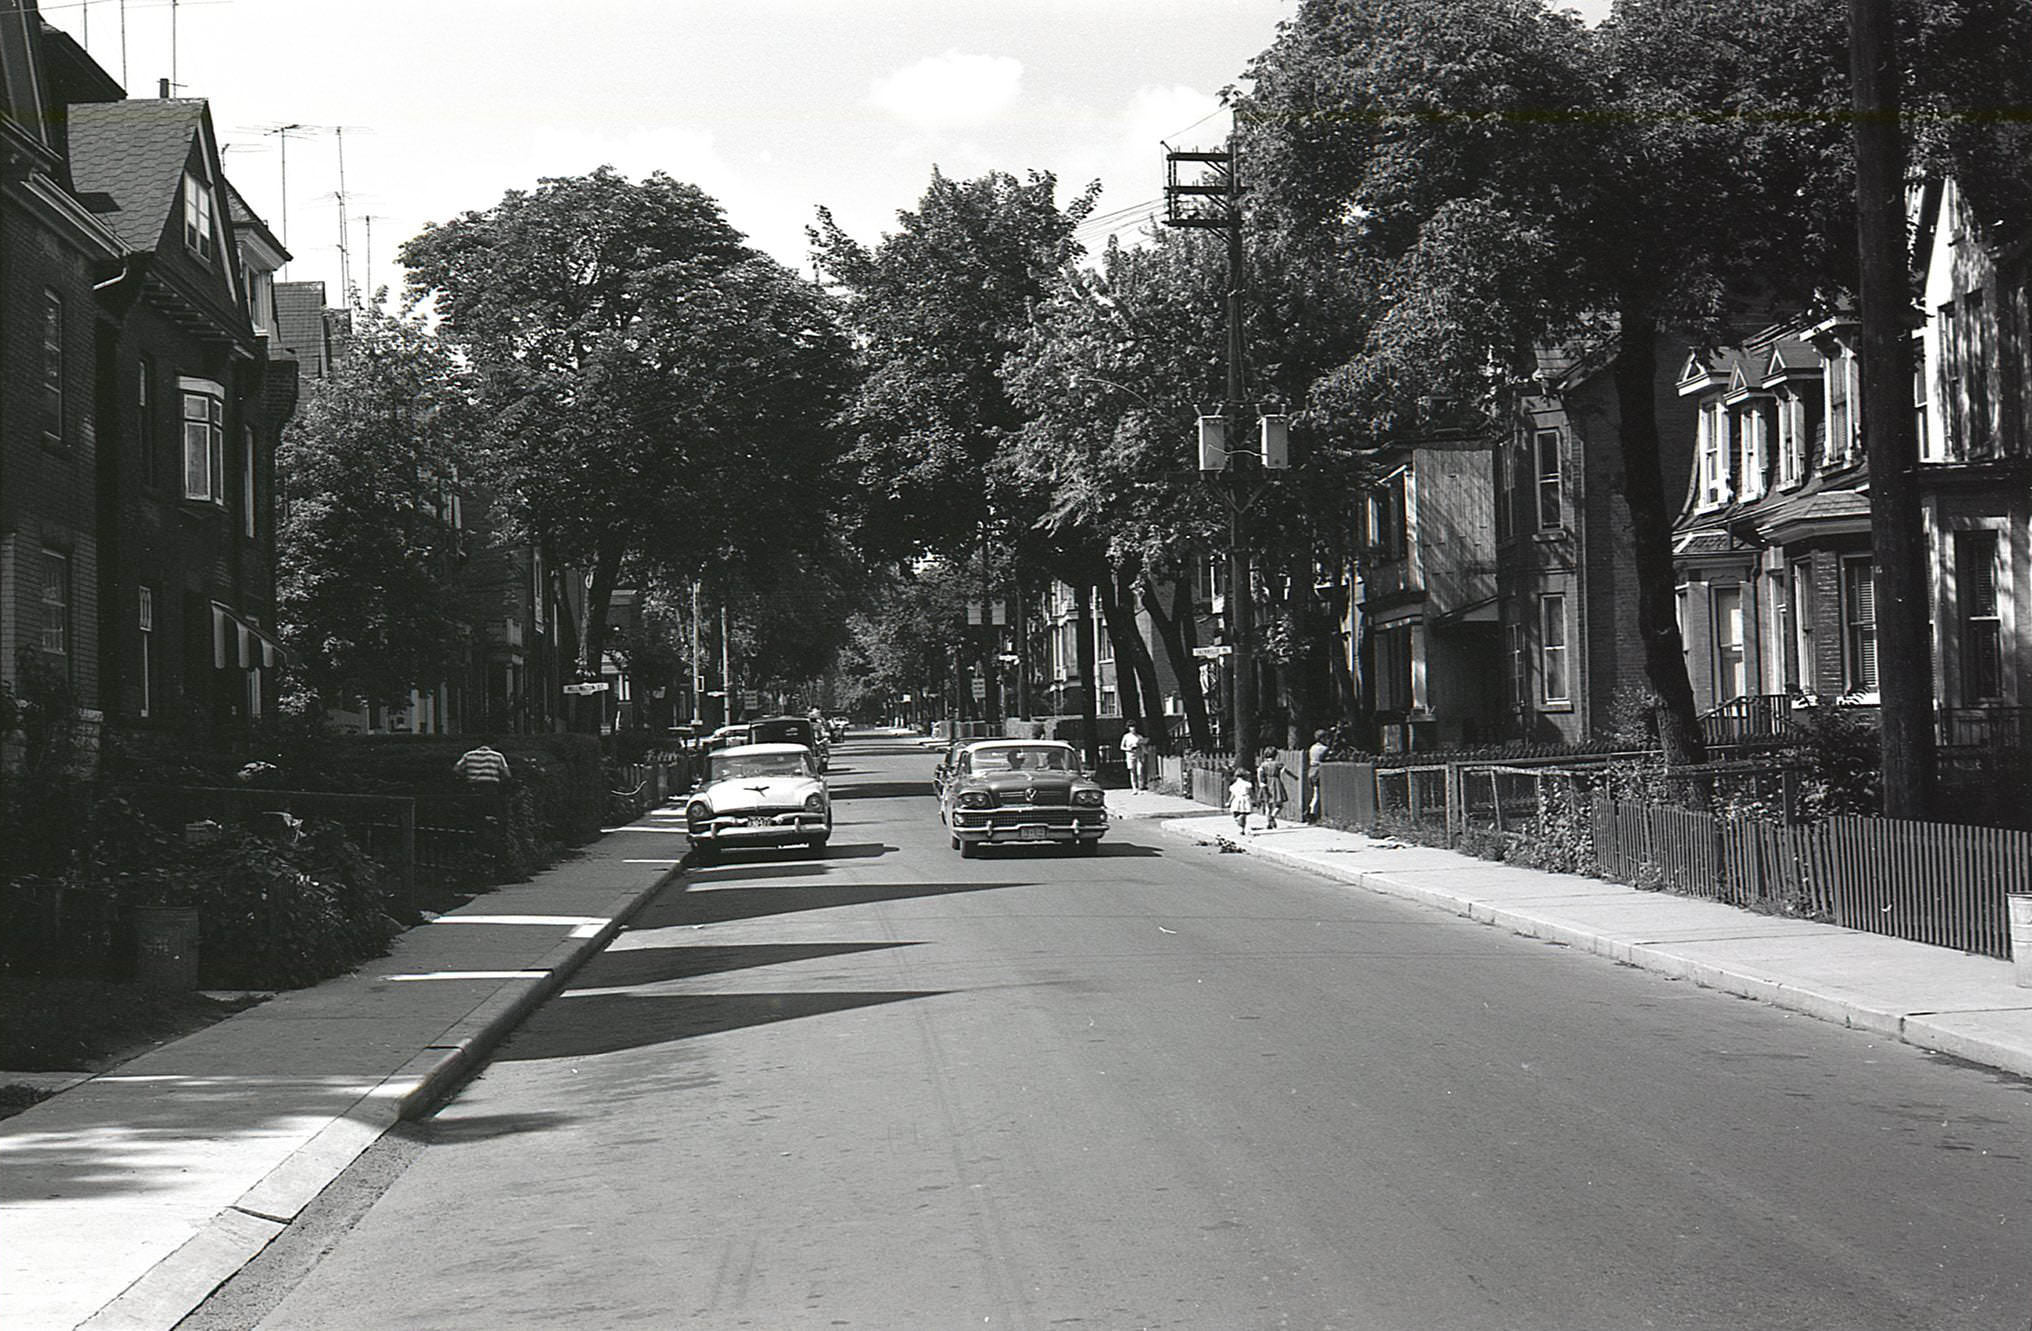 Looking north along Sackville Street, toward the intersection with Sackville Place / Millington Street, 1963